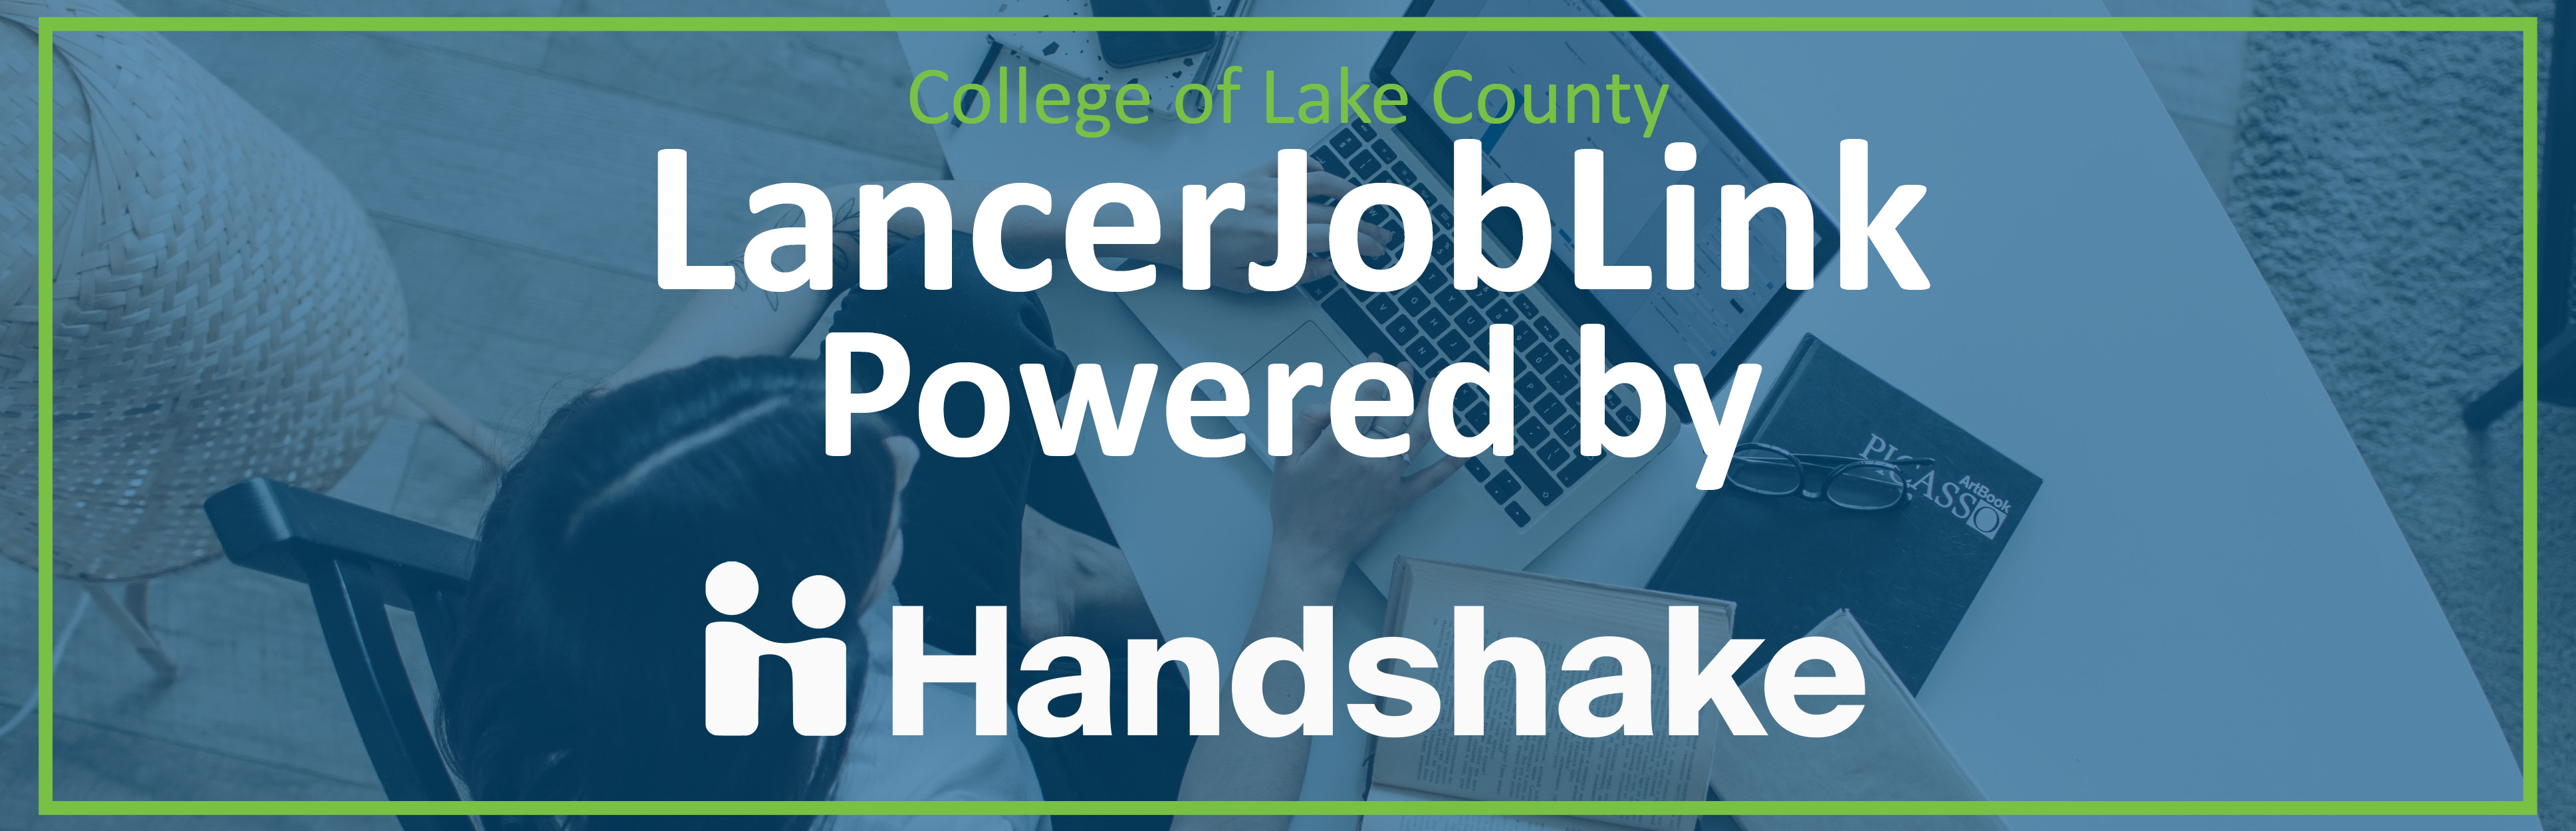 LancerJobLink powered by Handshake